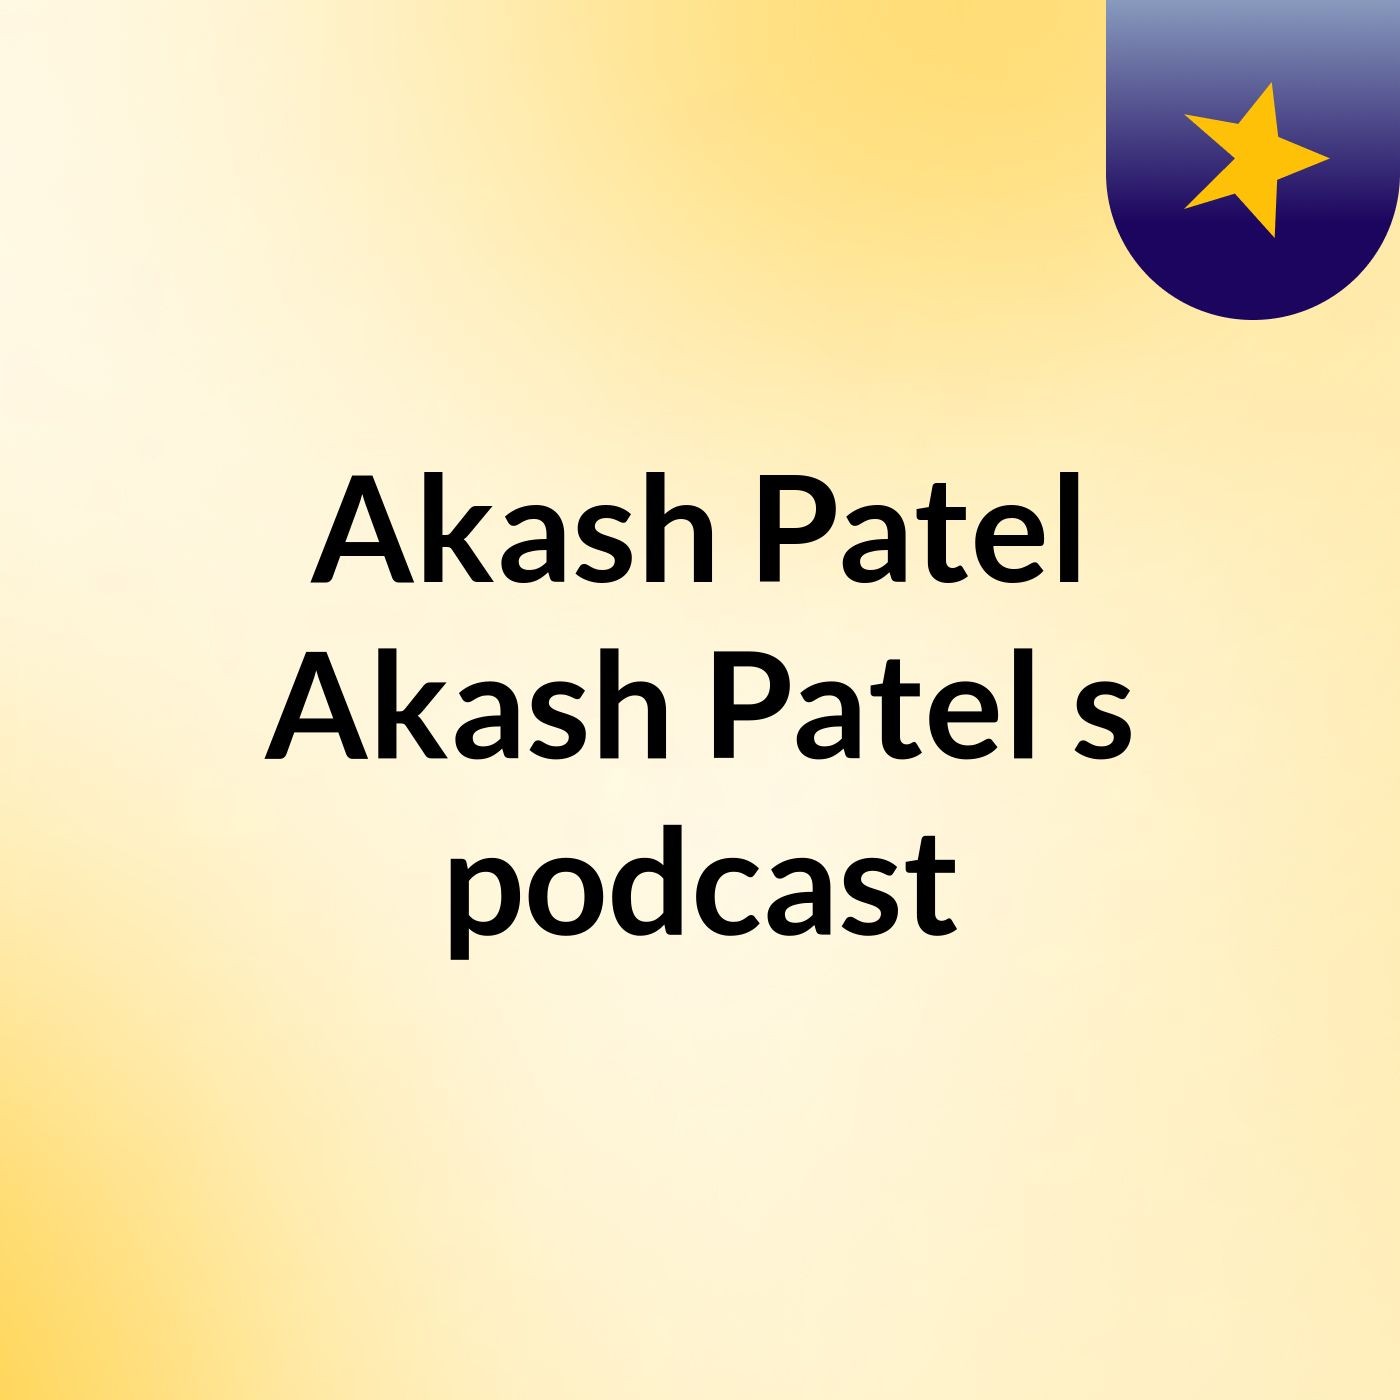 Episode 3 - Akash Patel Akash Patel's podcast